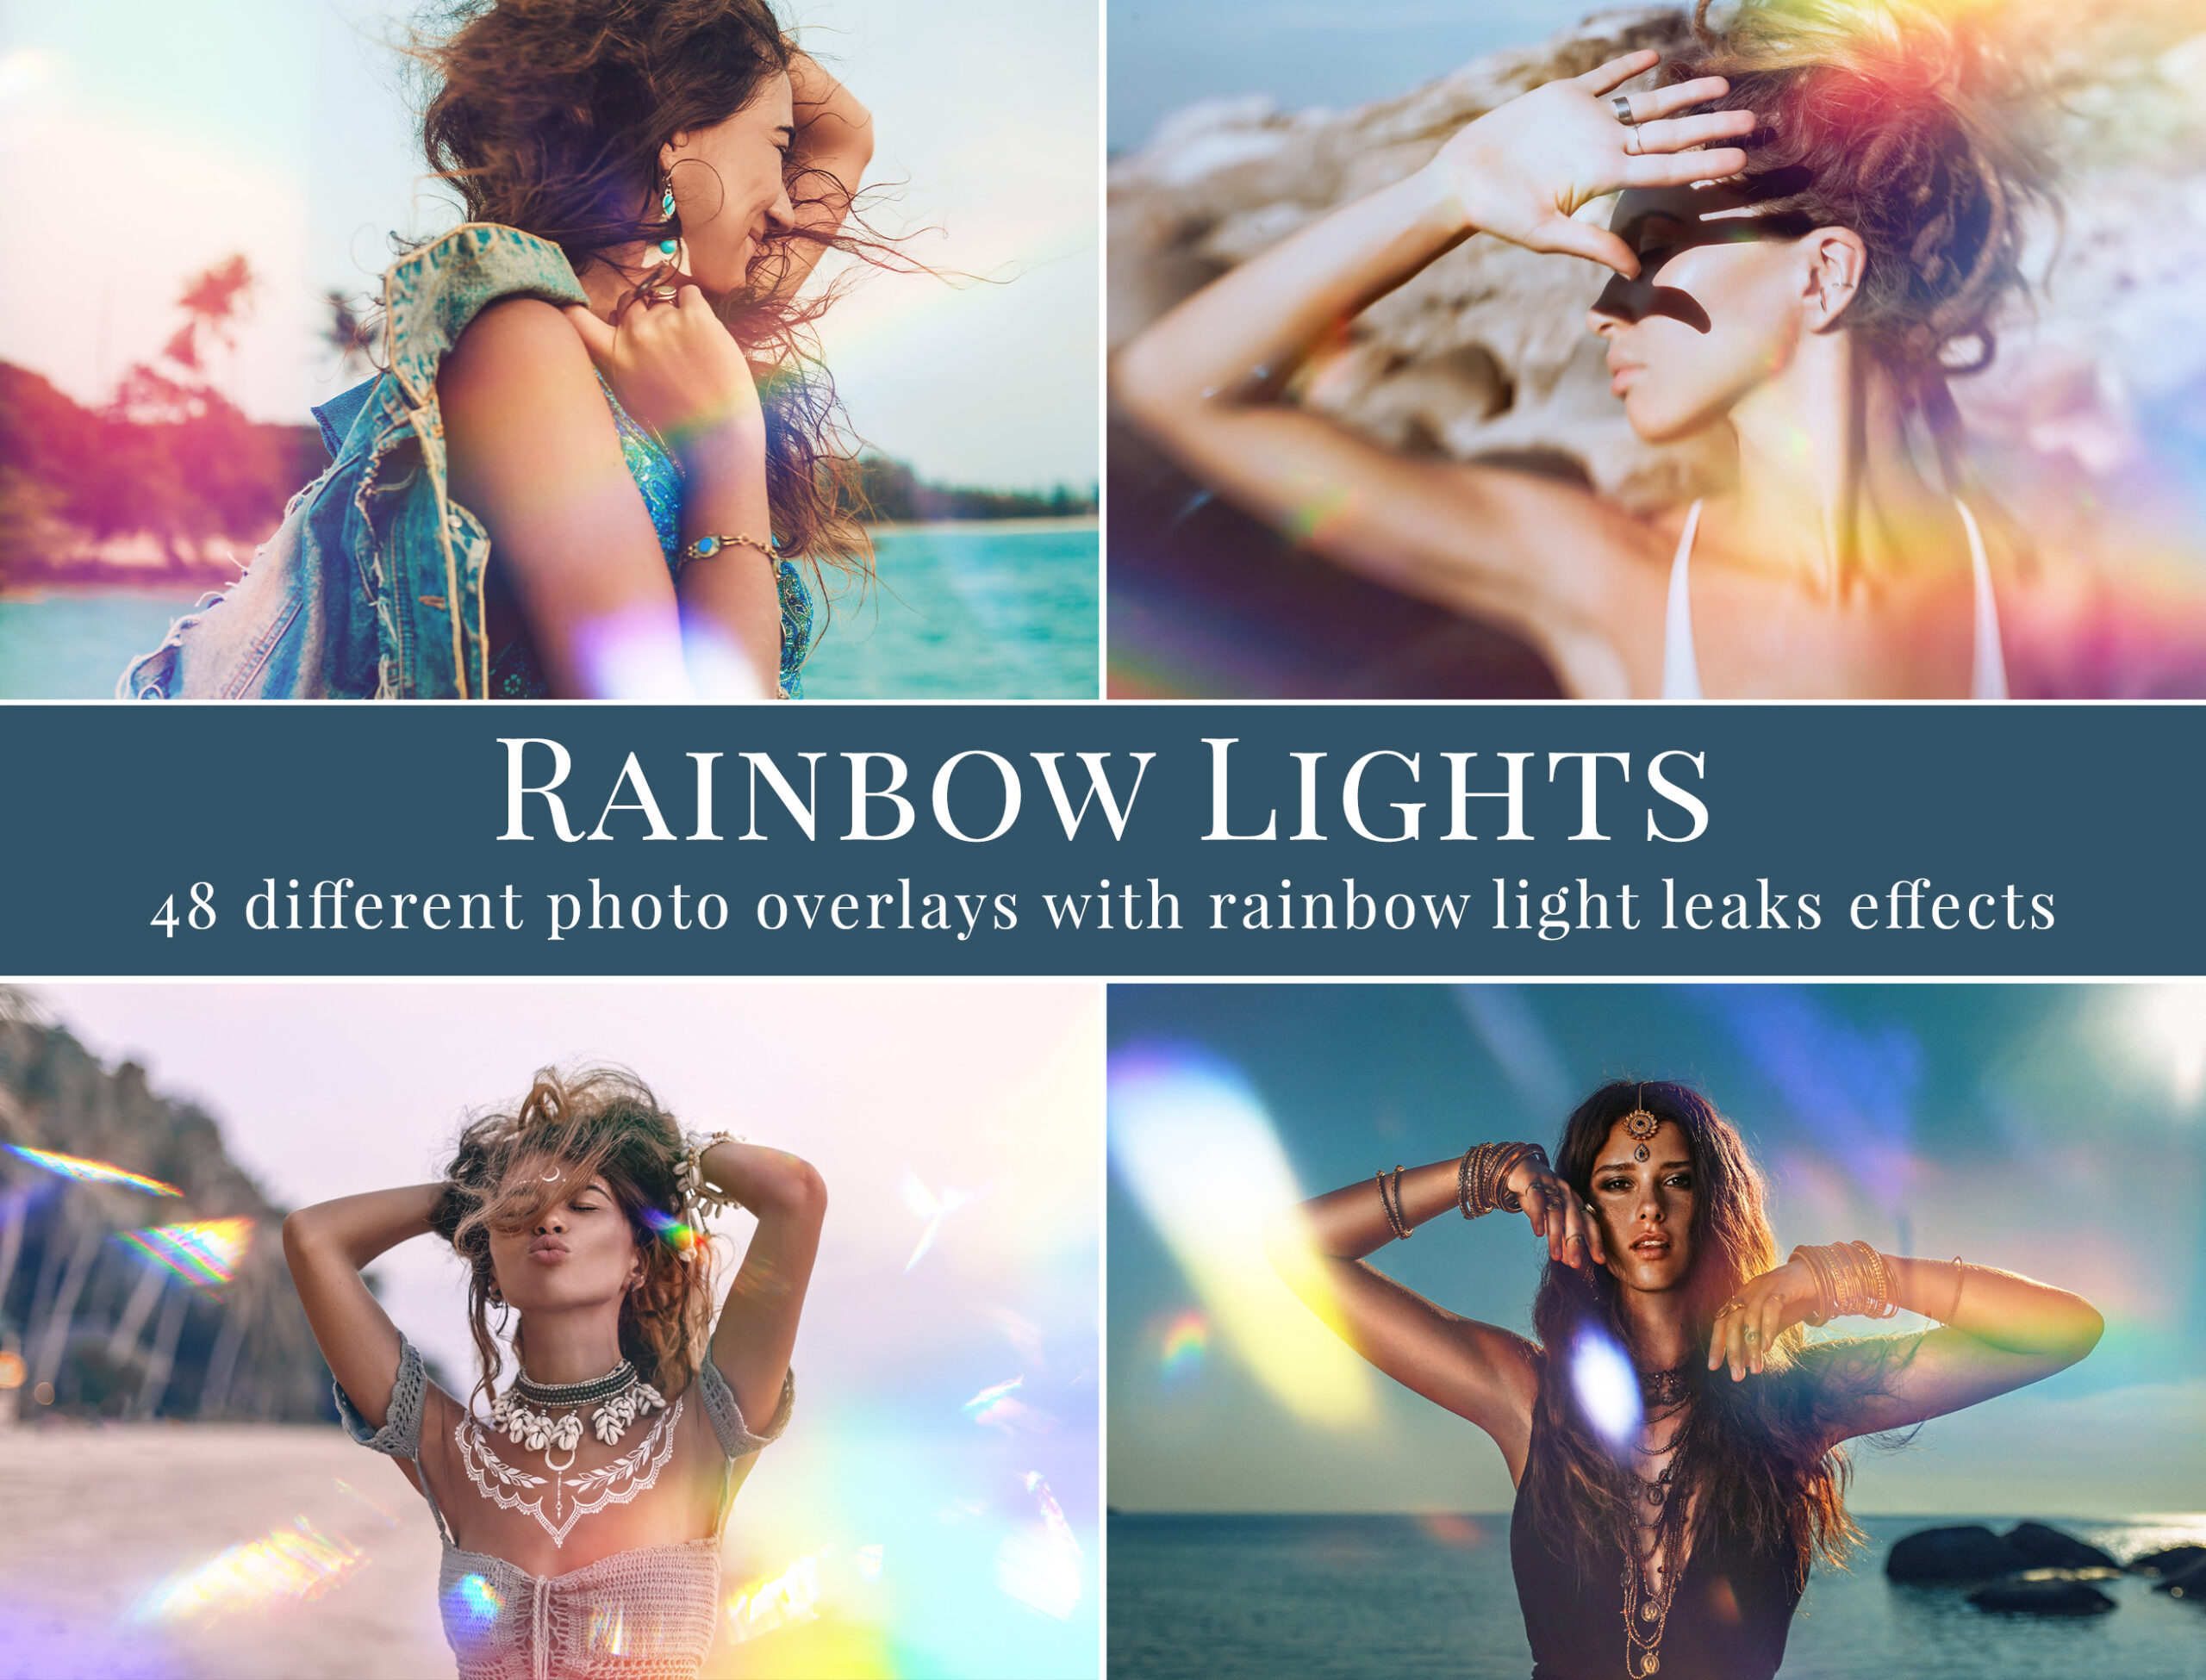 Rainbow Lights photo overlays